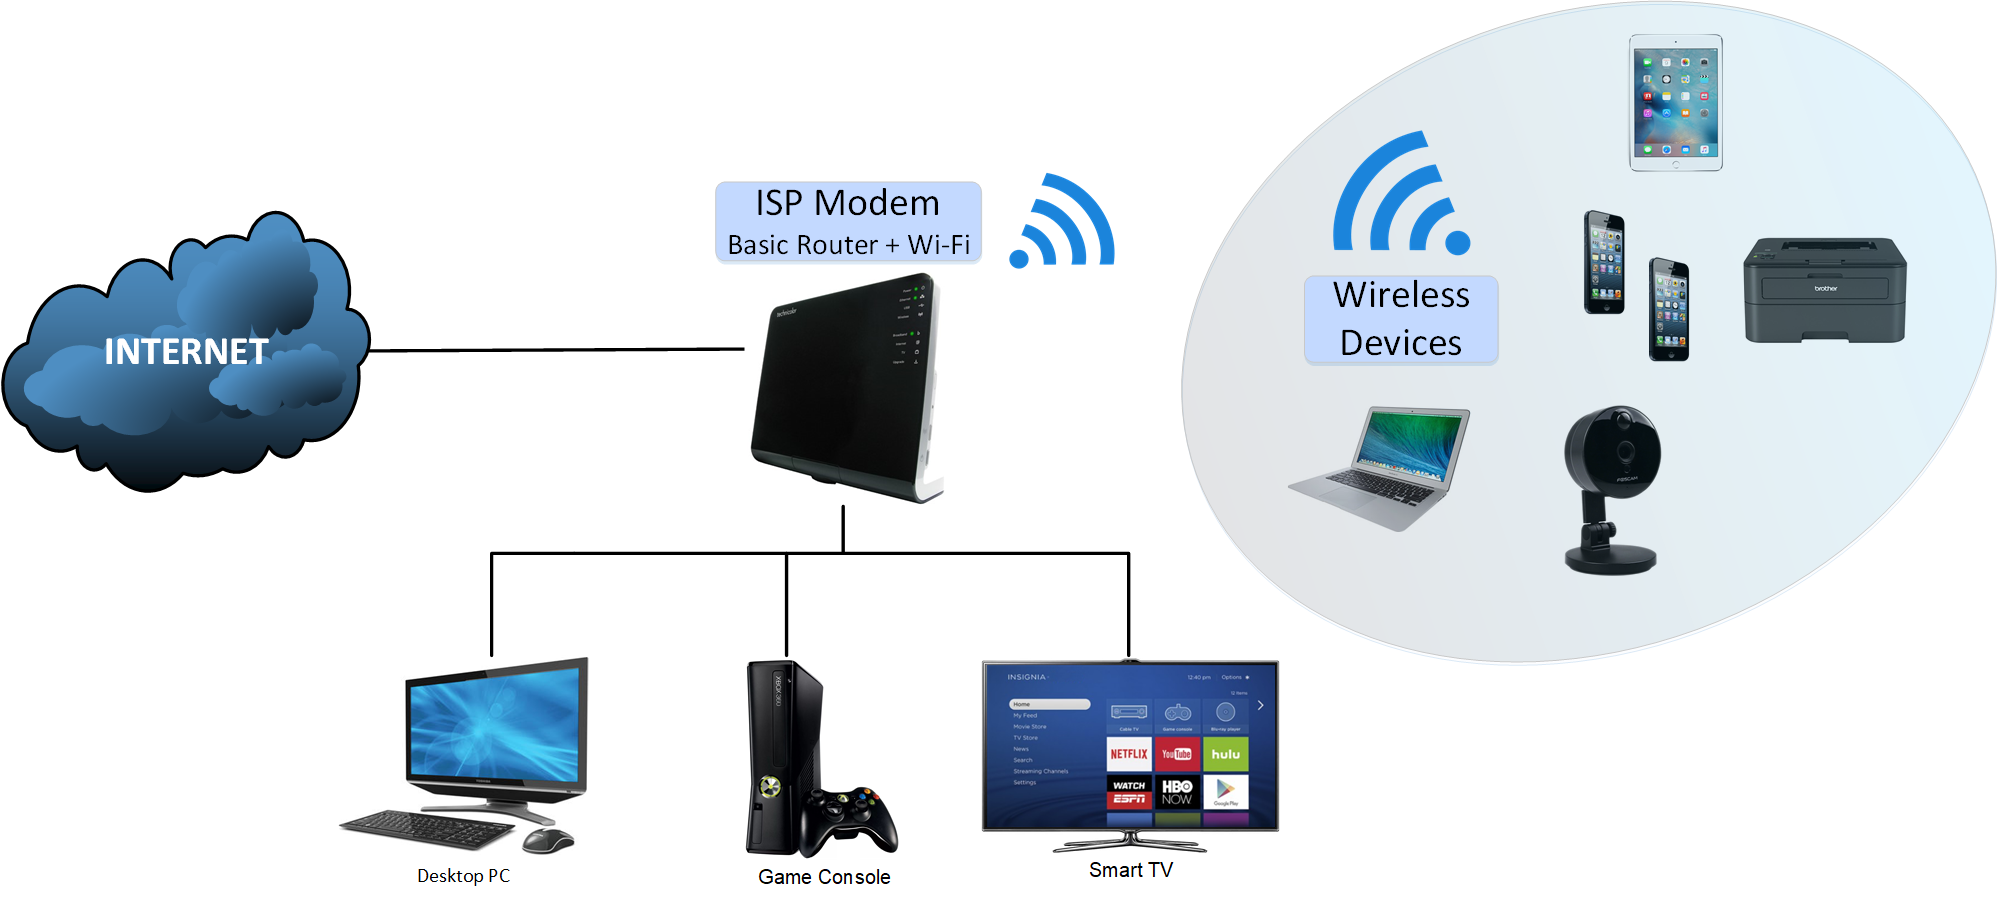 Internet service provider is. Два компьютера. ISP. Wireless Intrusion Detection System. Internet service provider.